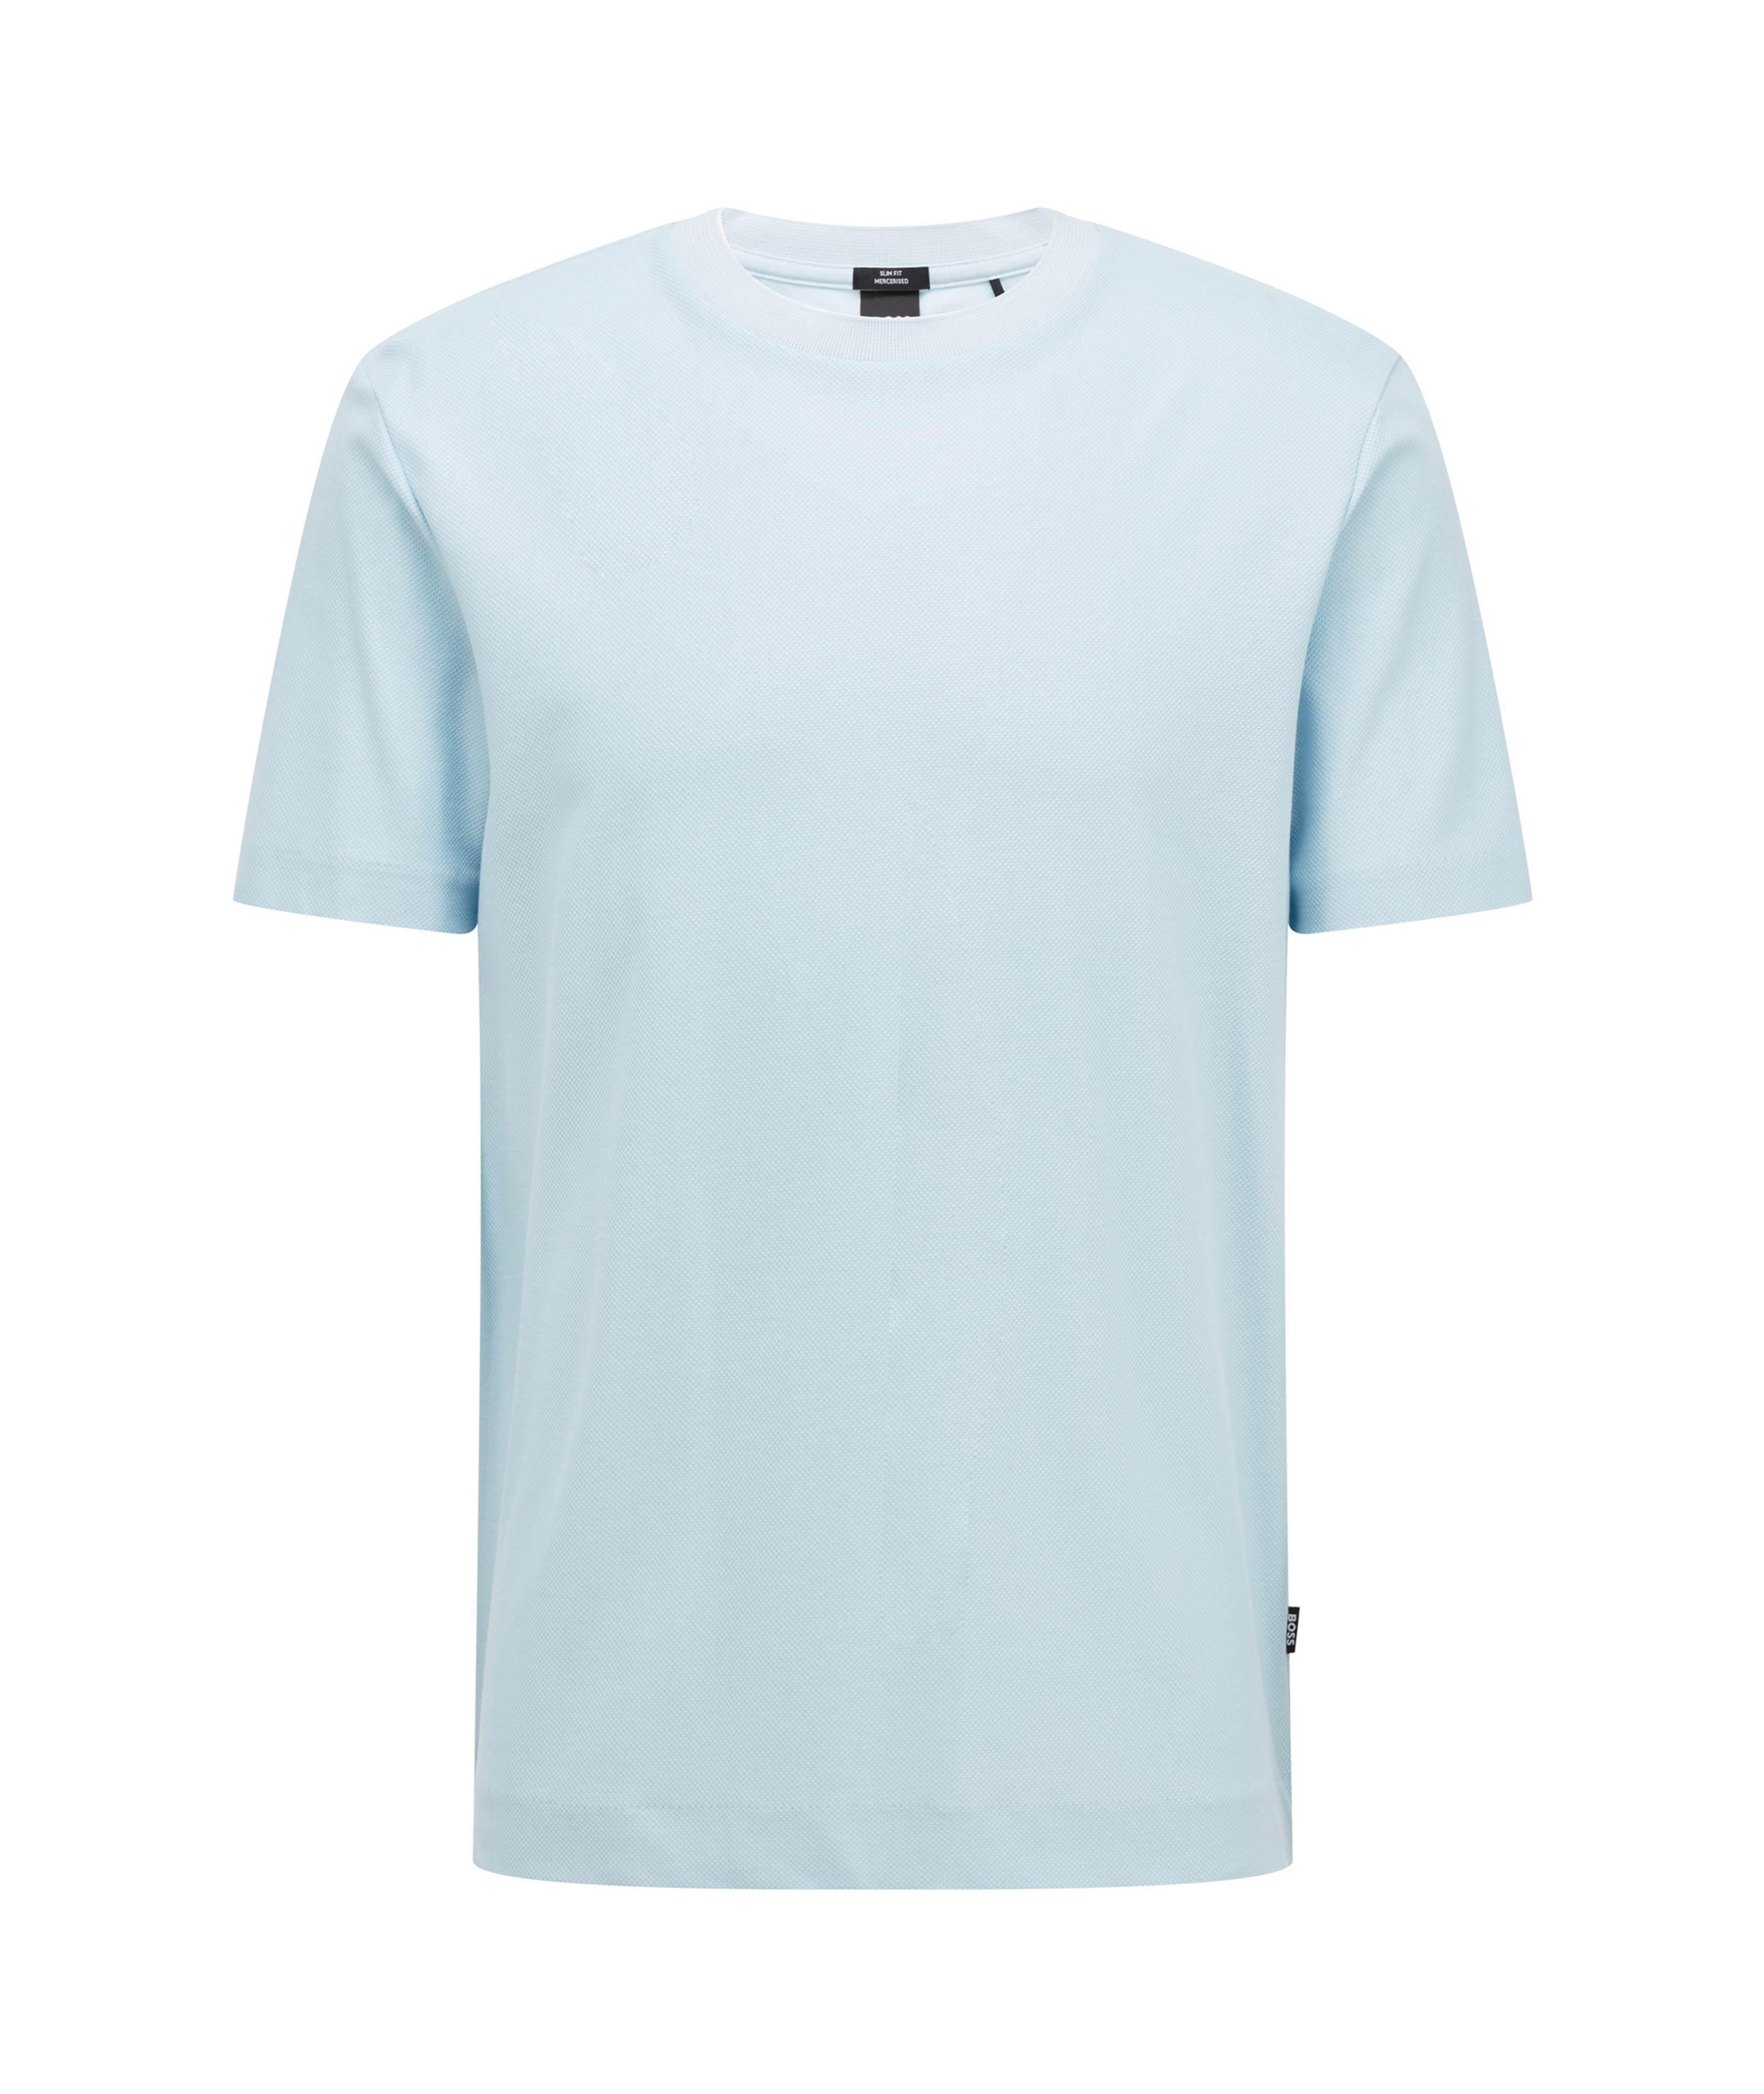 Short-Sleeve Slim-Fit Honeycomb Cotton T-Shirt image 0